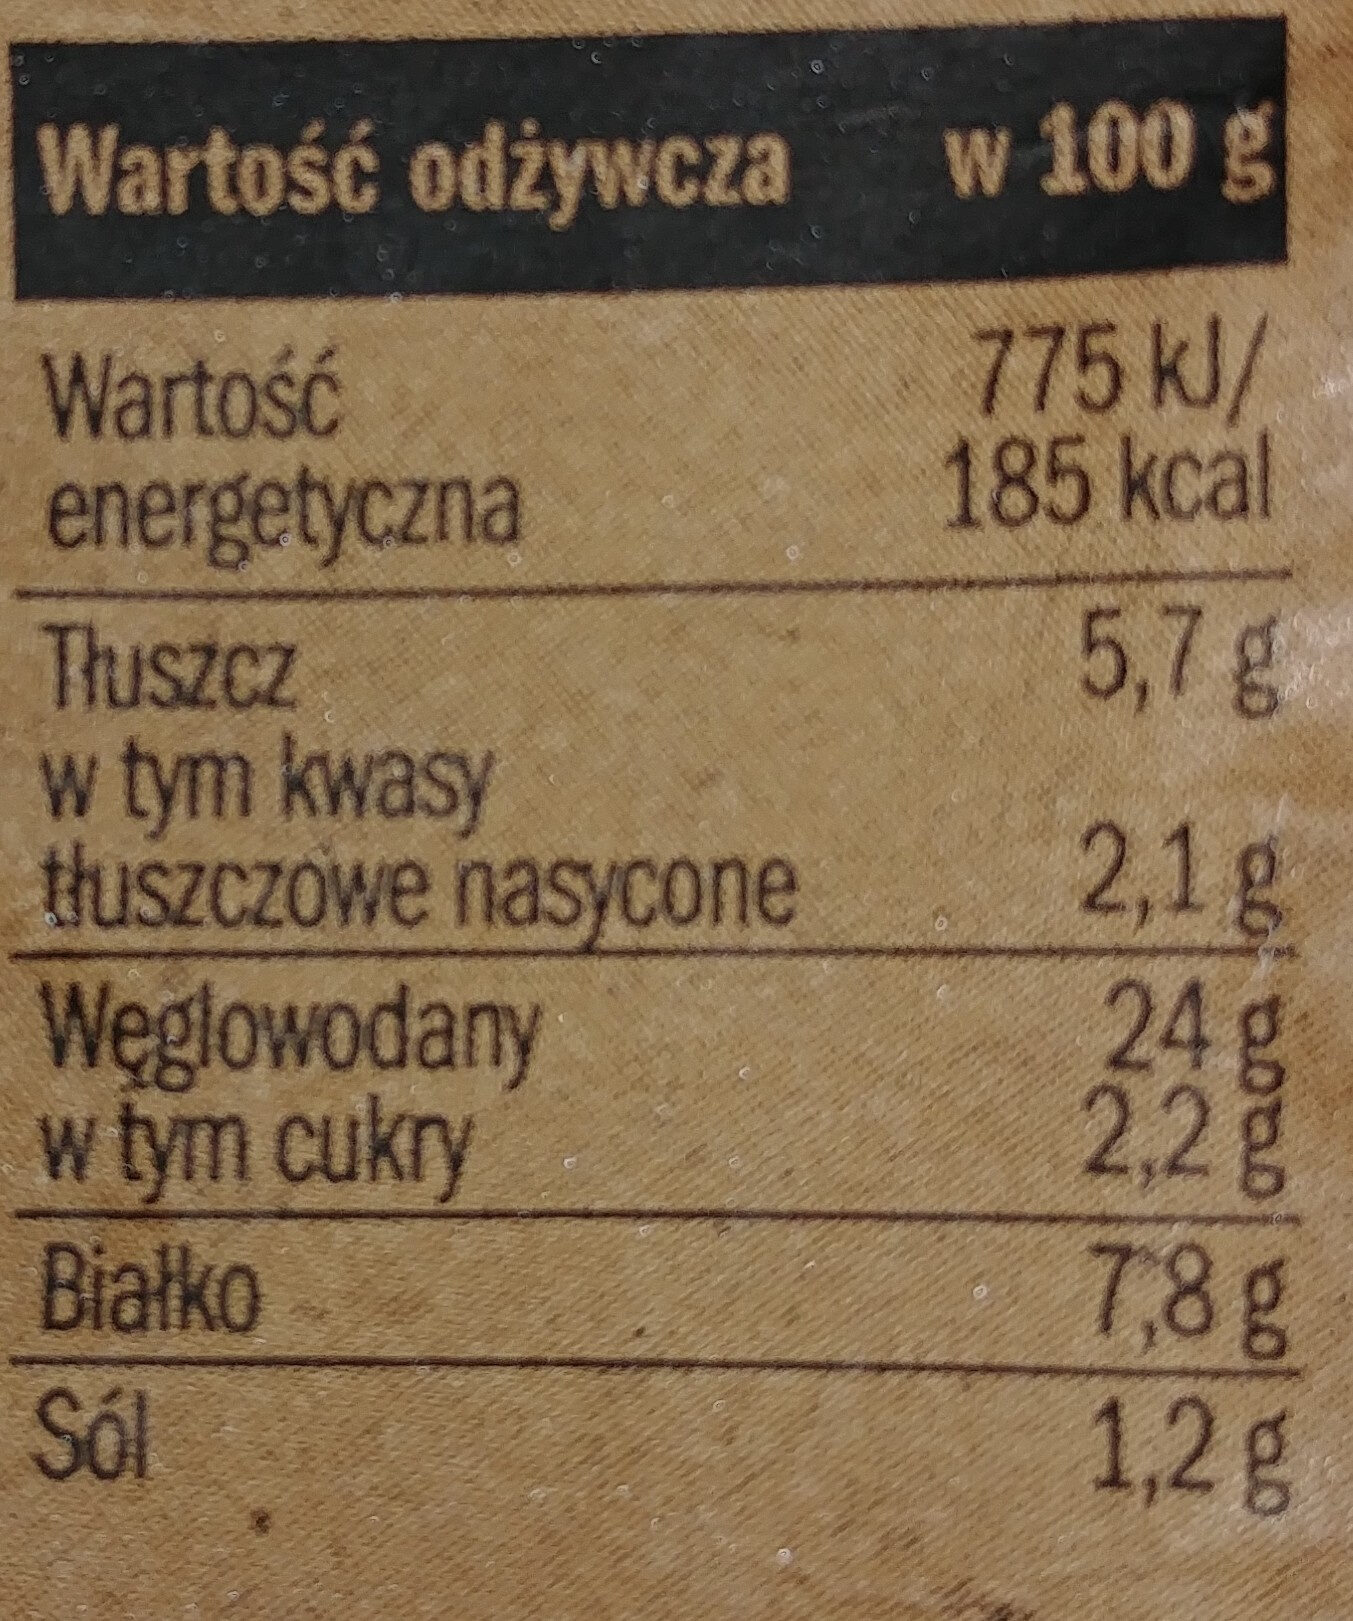 Pierogi z mięsem - Nutrition facts - pl